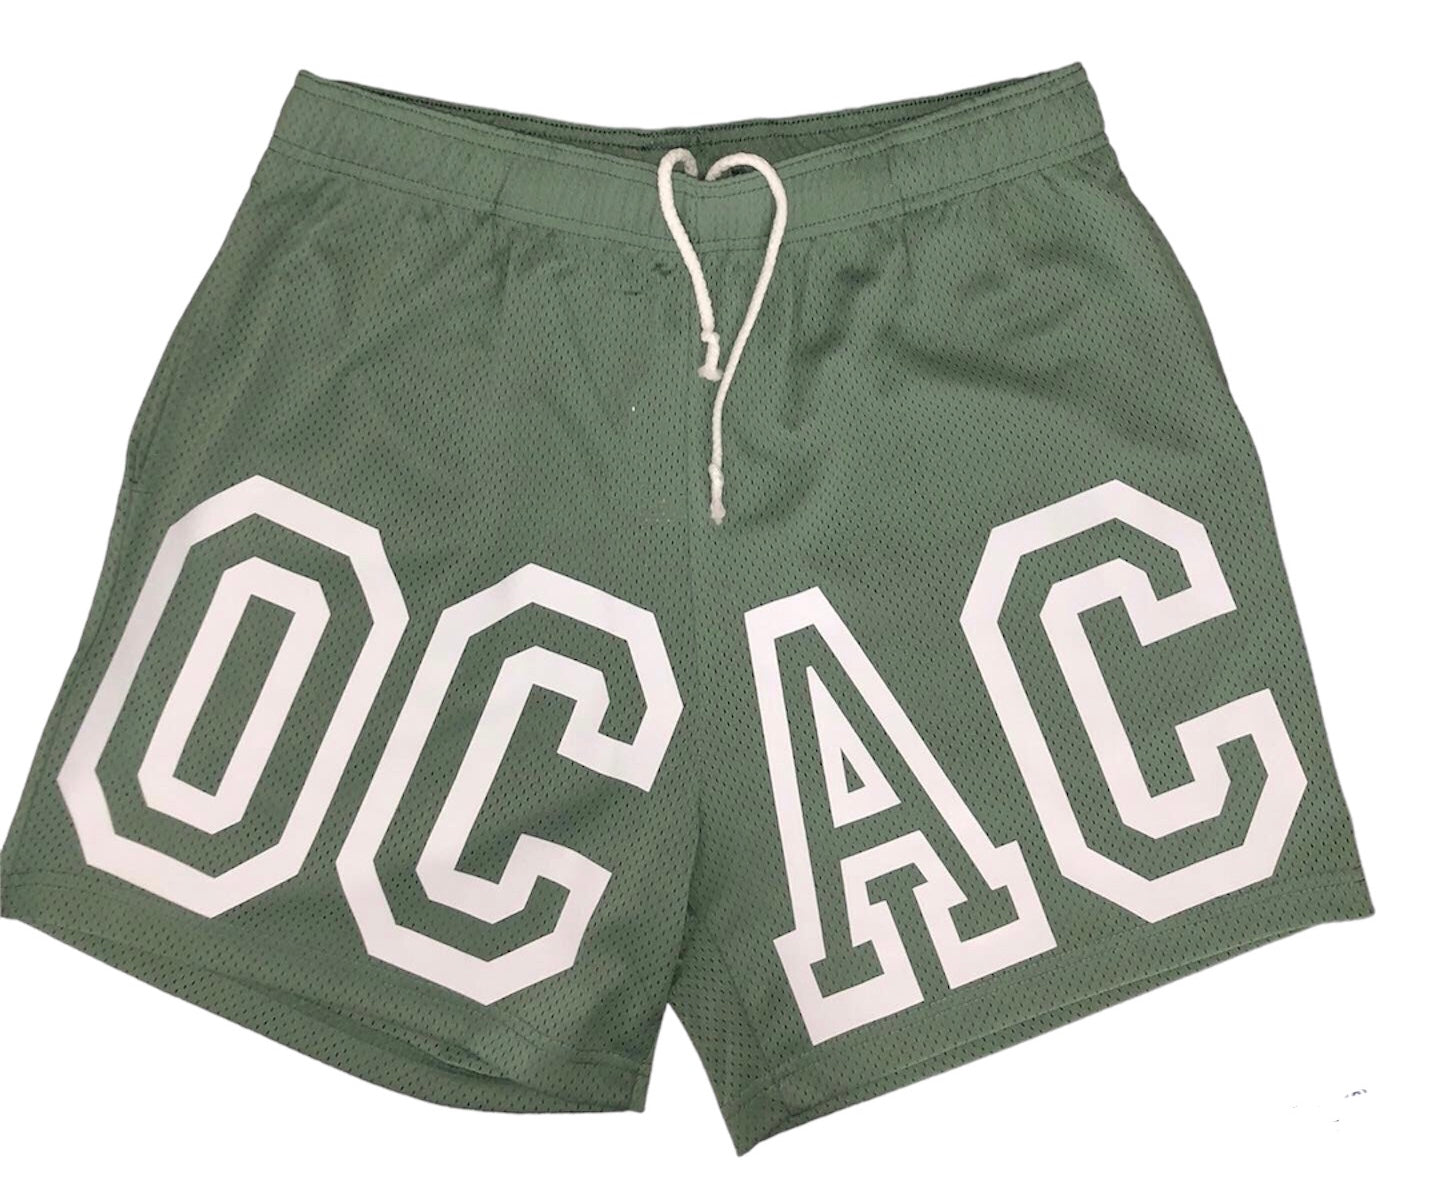 OCAC Mesh Shorts